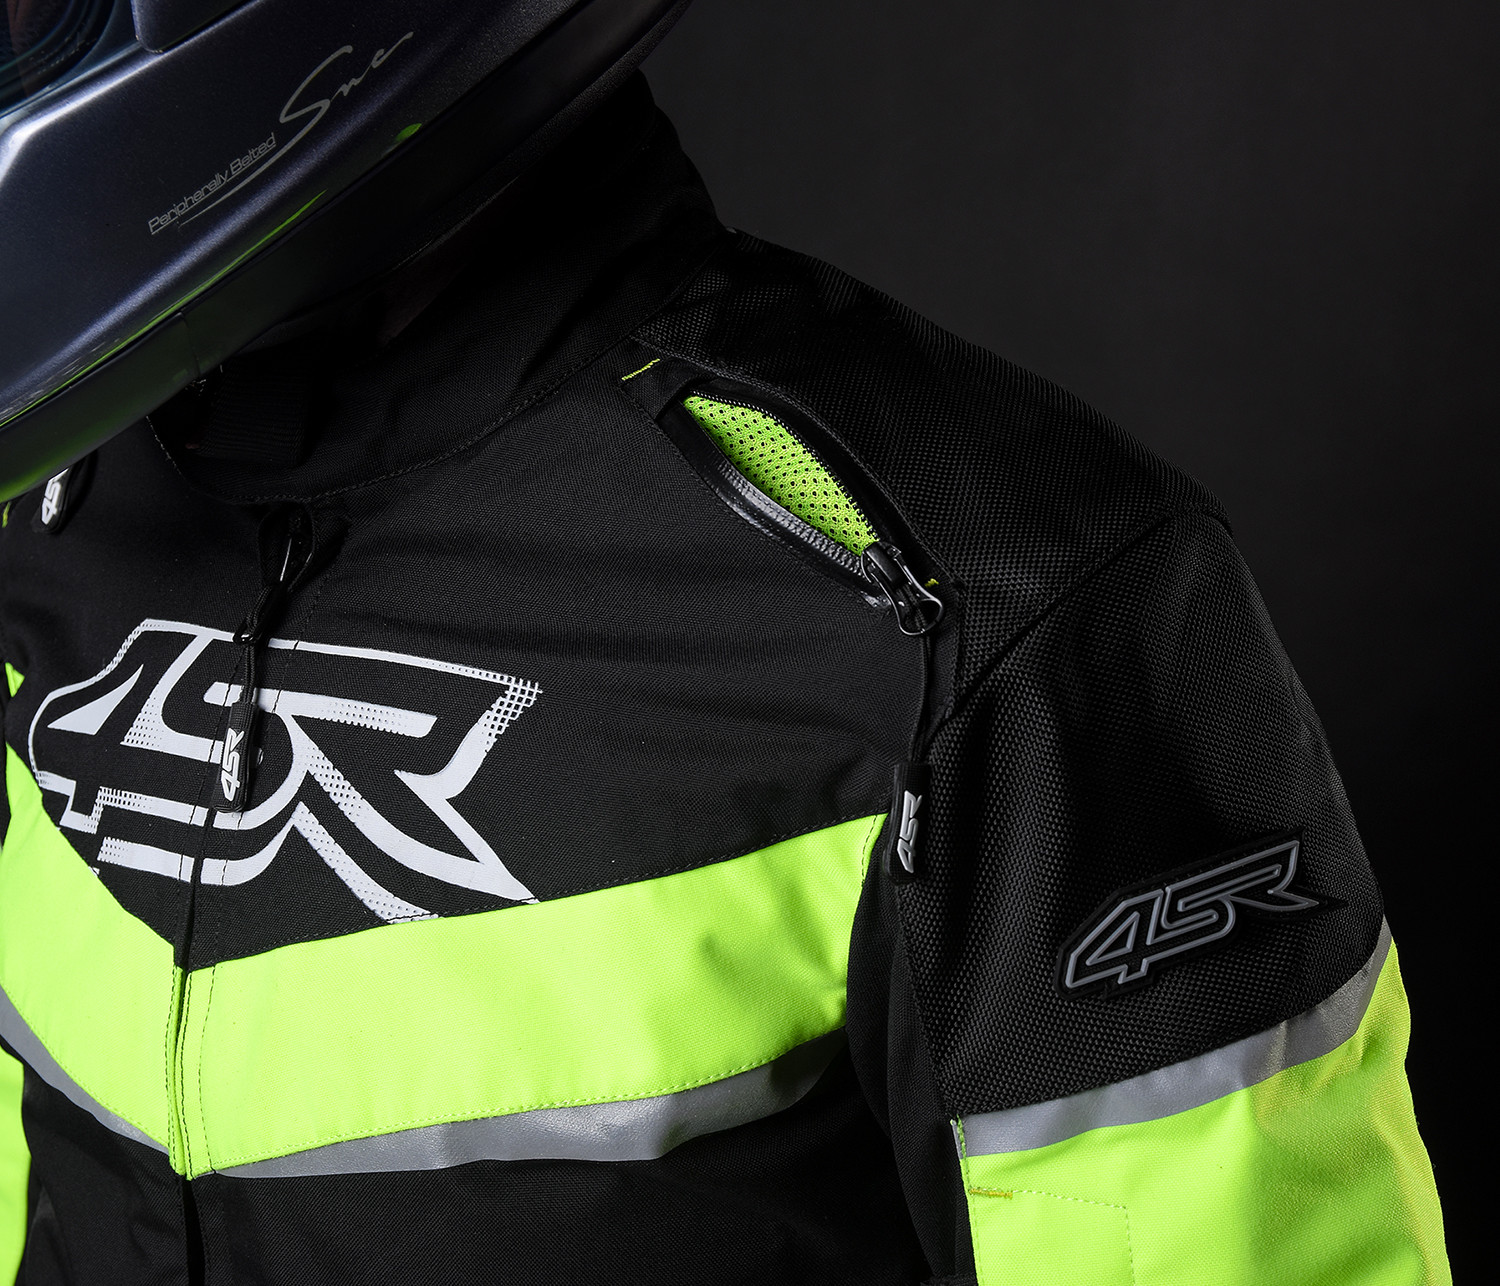 4SR Young Gun Nitro Textile Motorcycle Jacket